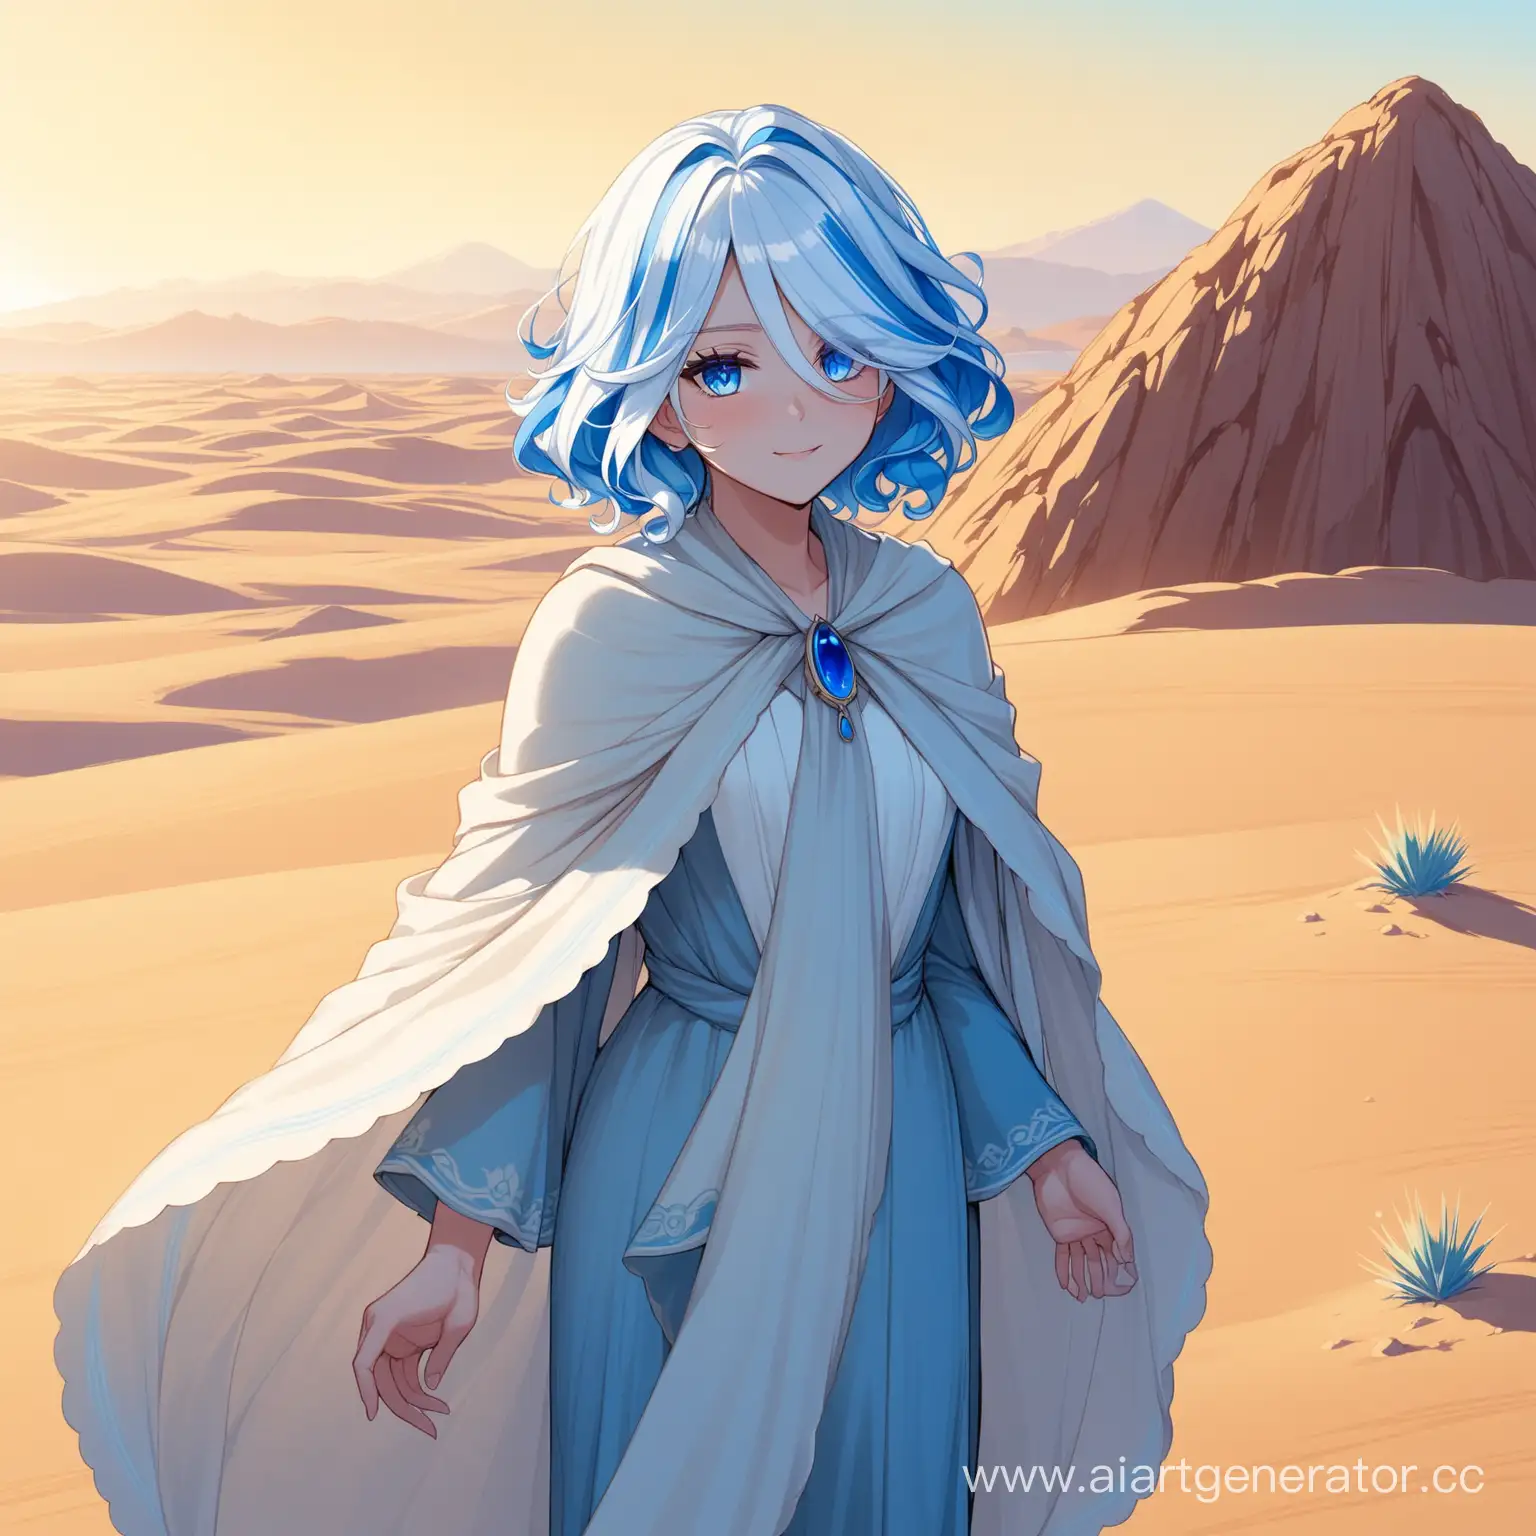 Furina-Standing-in-Desert-Wearing-HermitLike-Shawl